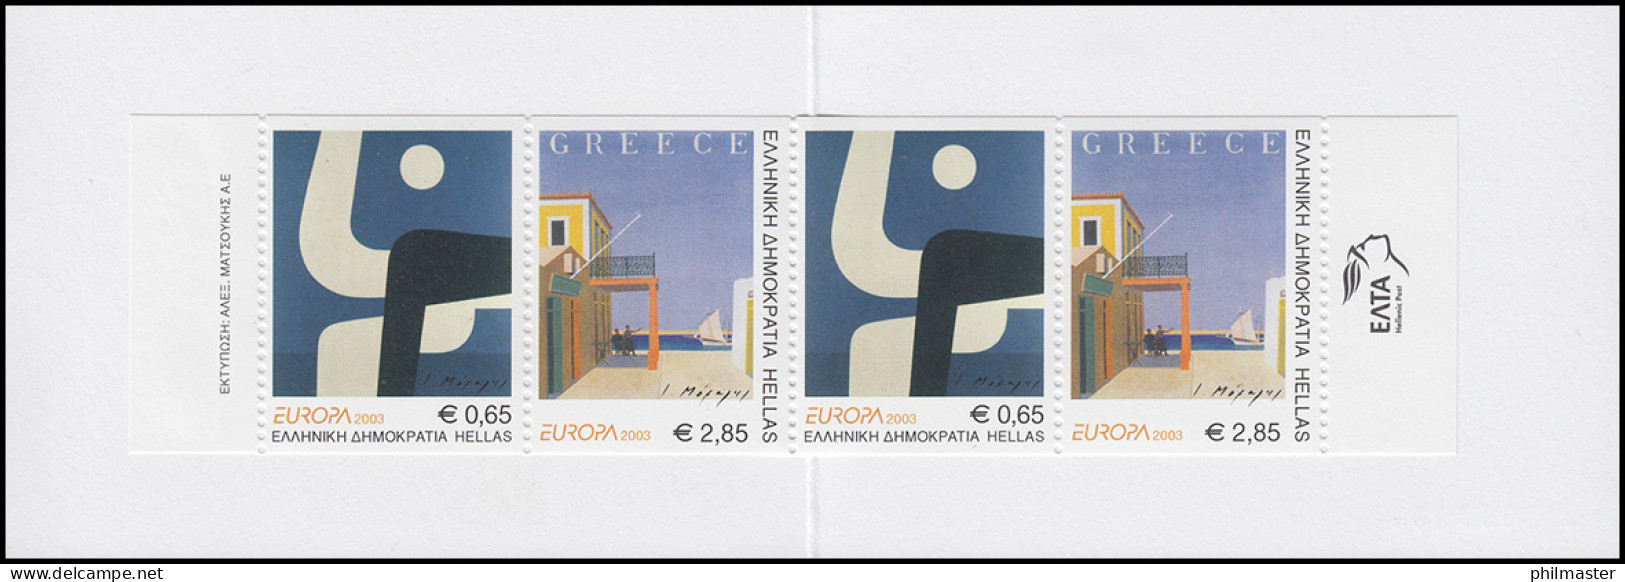 Griechenland Markenheftchen 25 Europa 2003, ** Postfrisch - Carnets